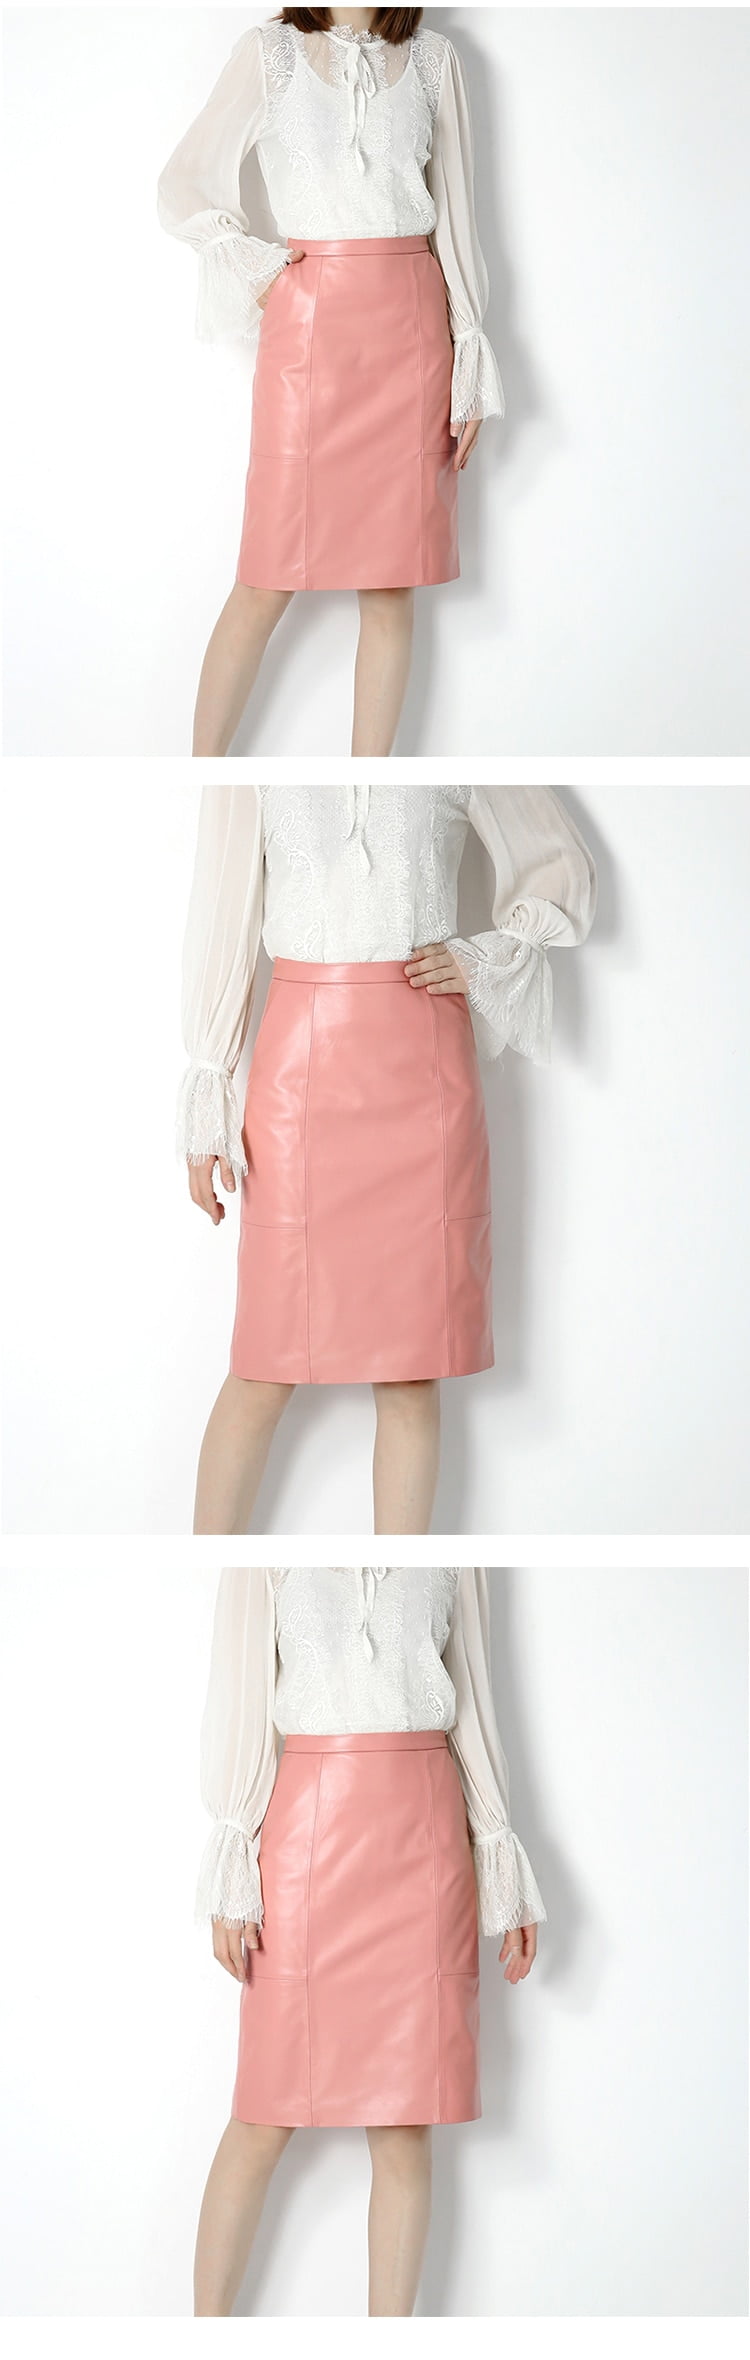 Women's Stylish Leather Pencil Skirt